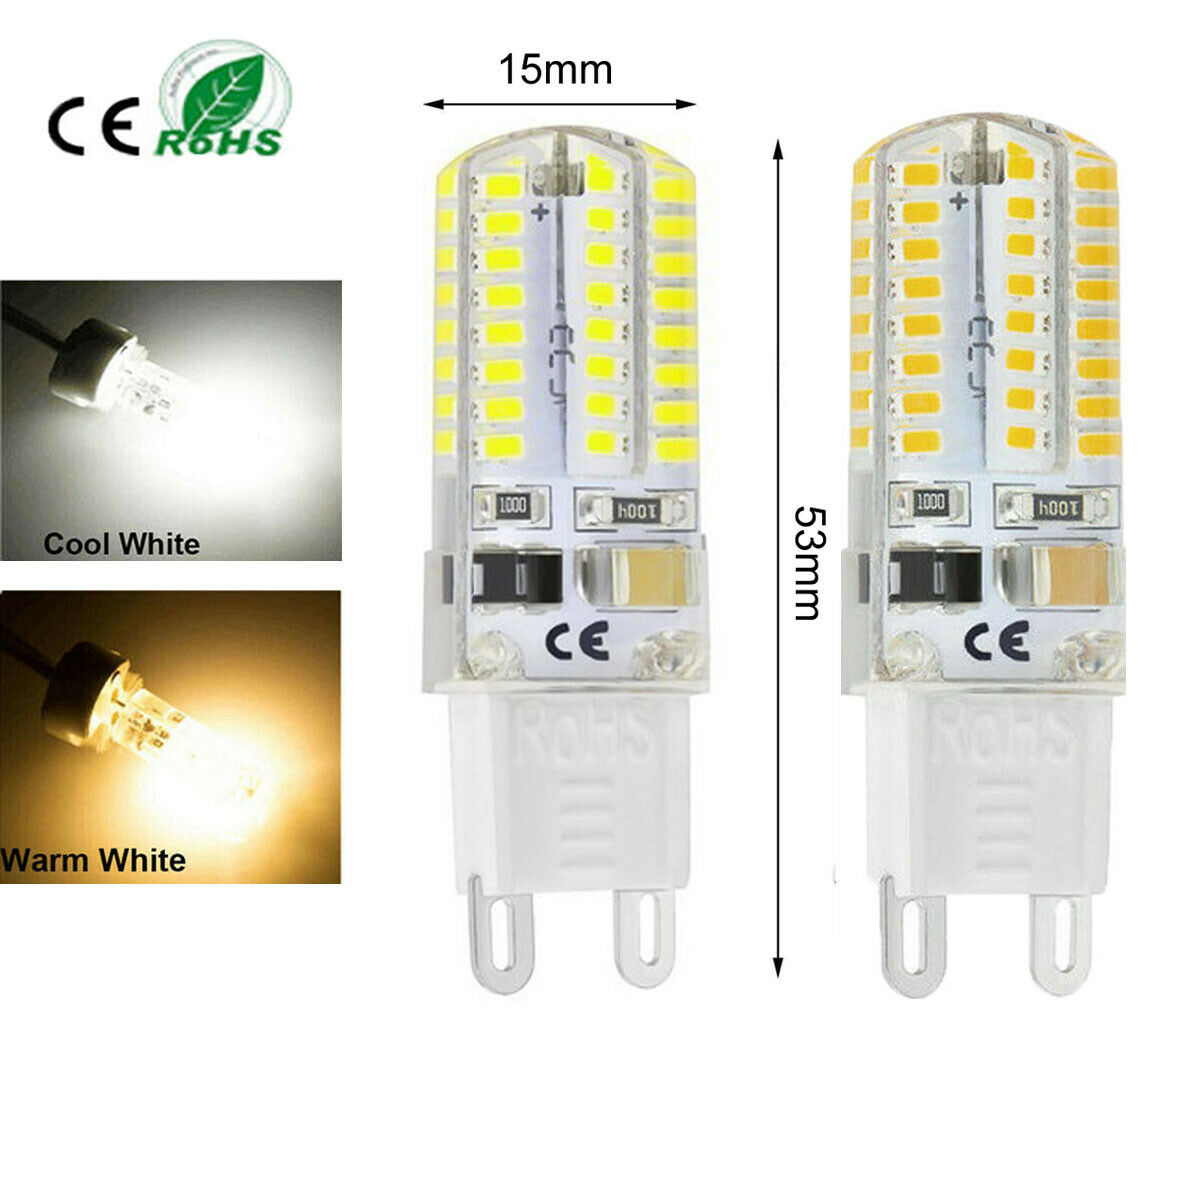 10PCS Dimmable LED G4 G9 Light Bulb 3W 6W 220V – LUMIN LAMP HOUSE